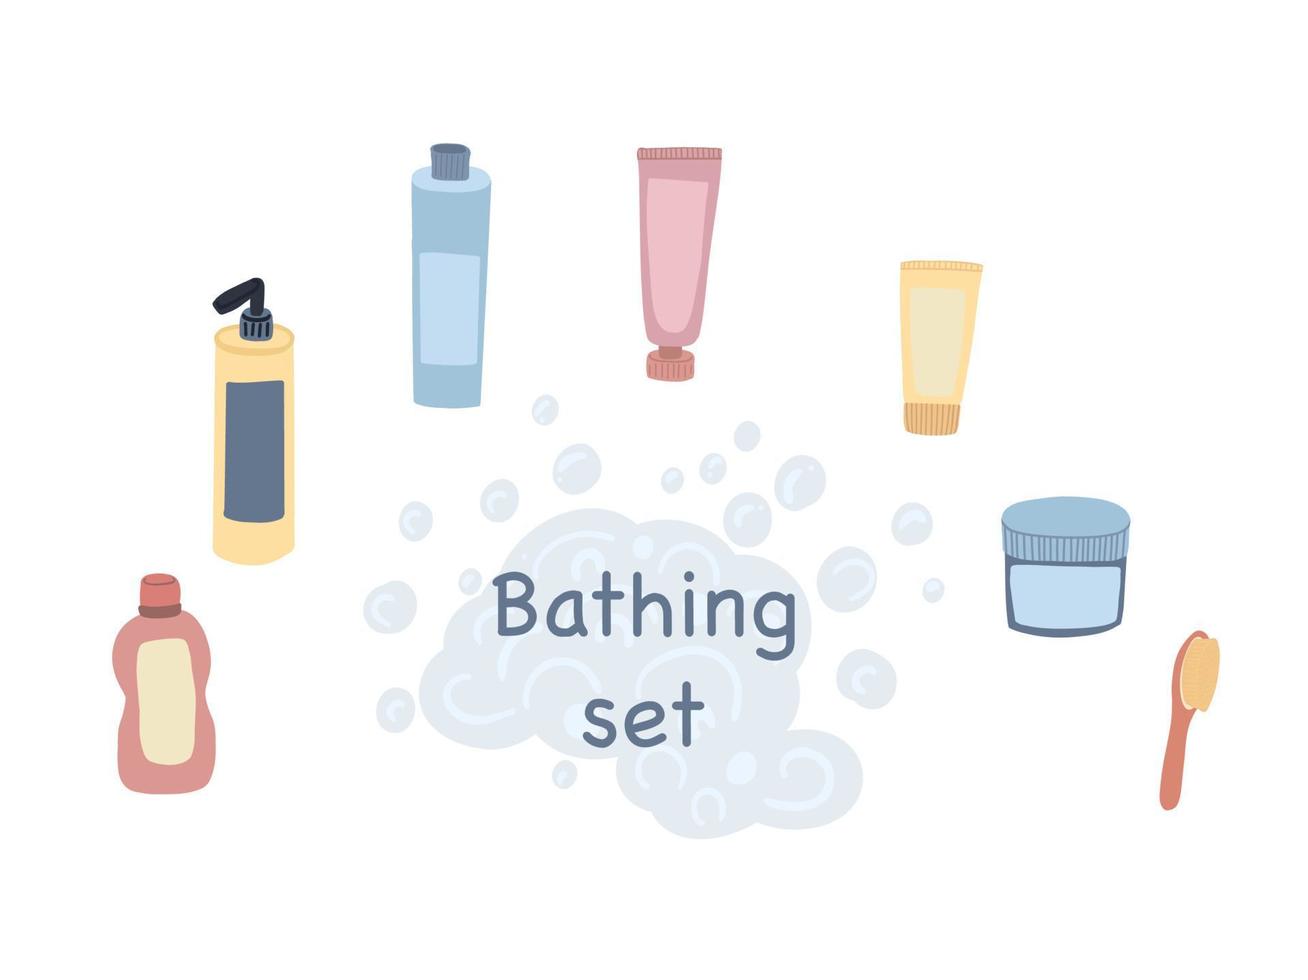 Bathing tubes creams shampooing set hand drawn vector